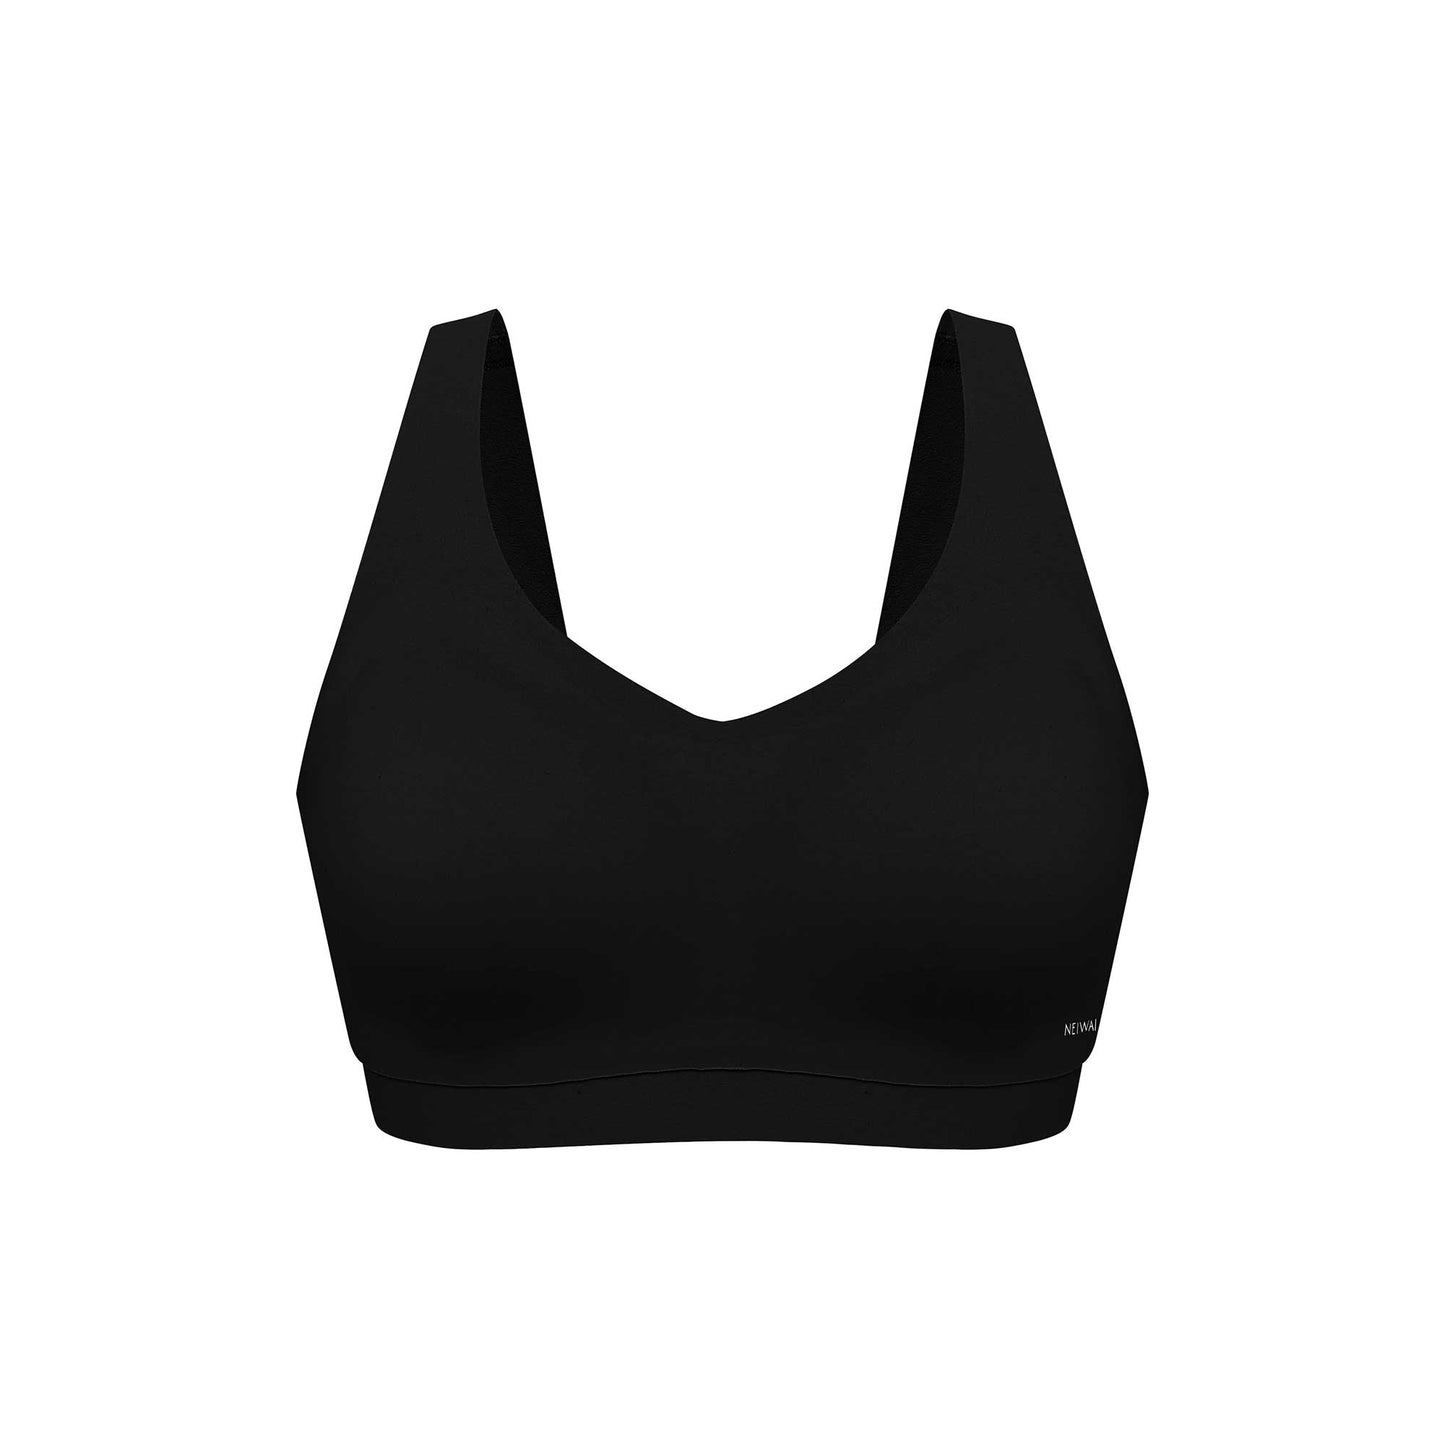 image of a black bra